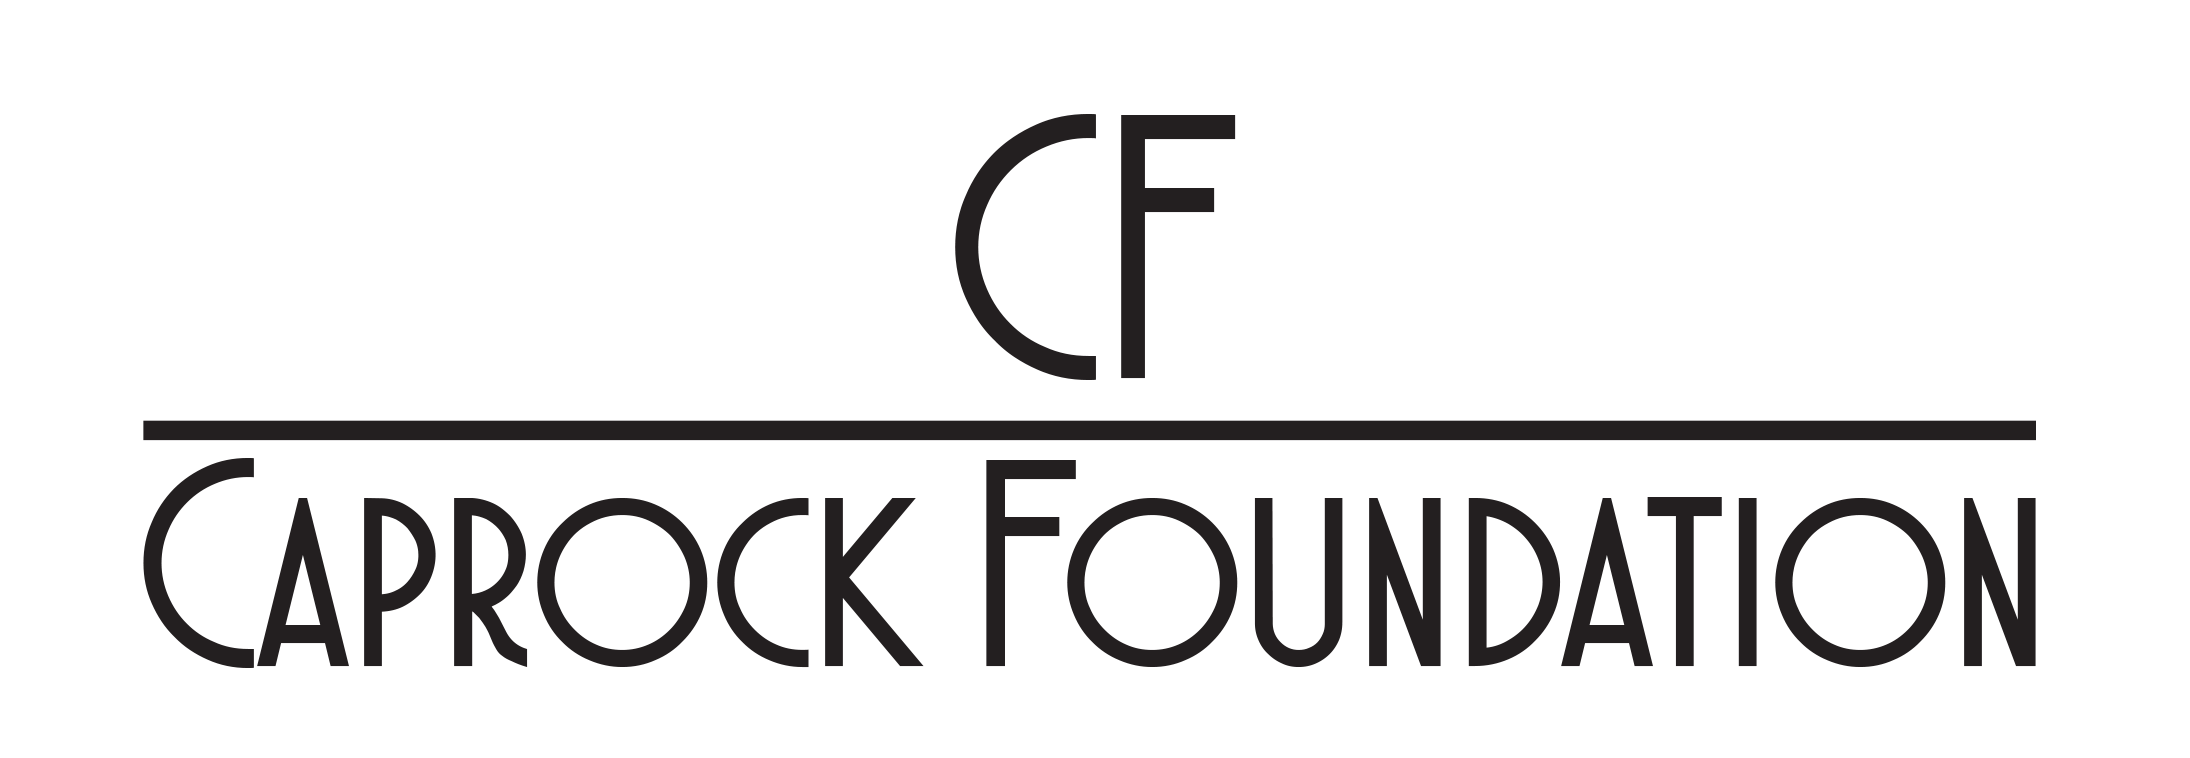 Caprock Foundation